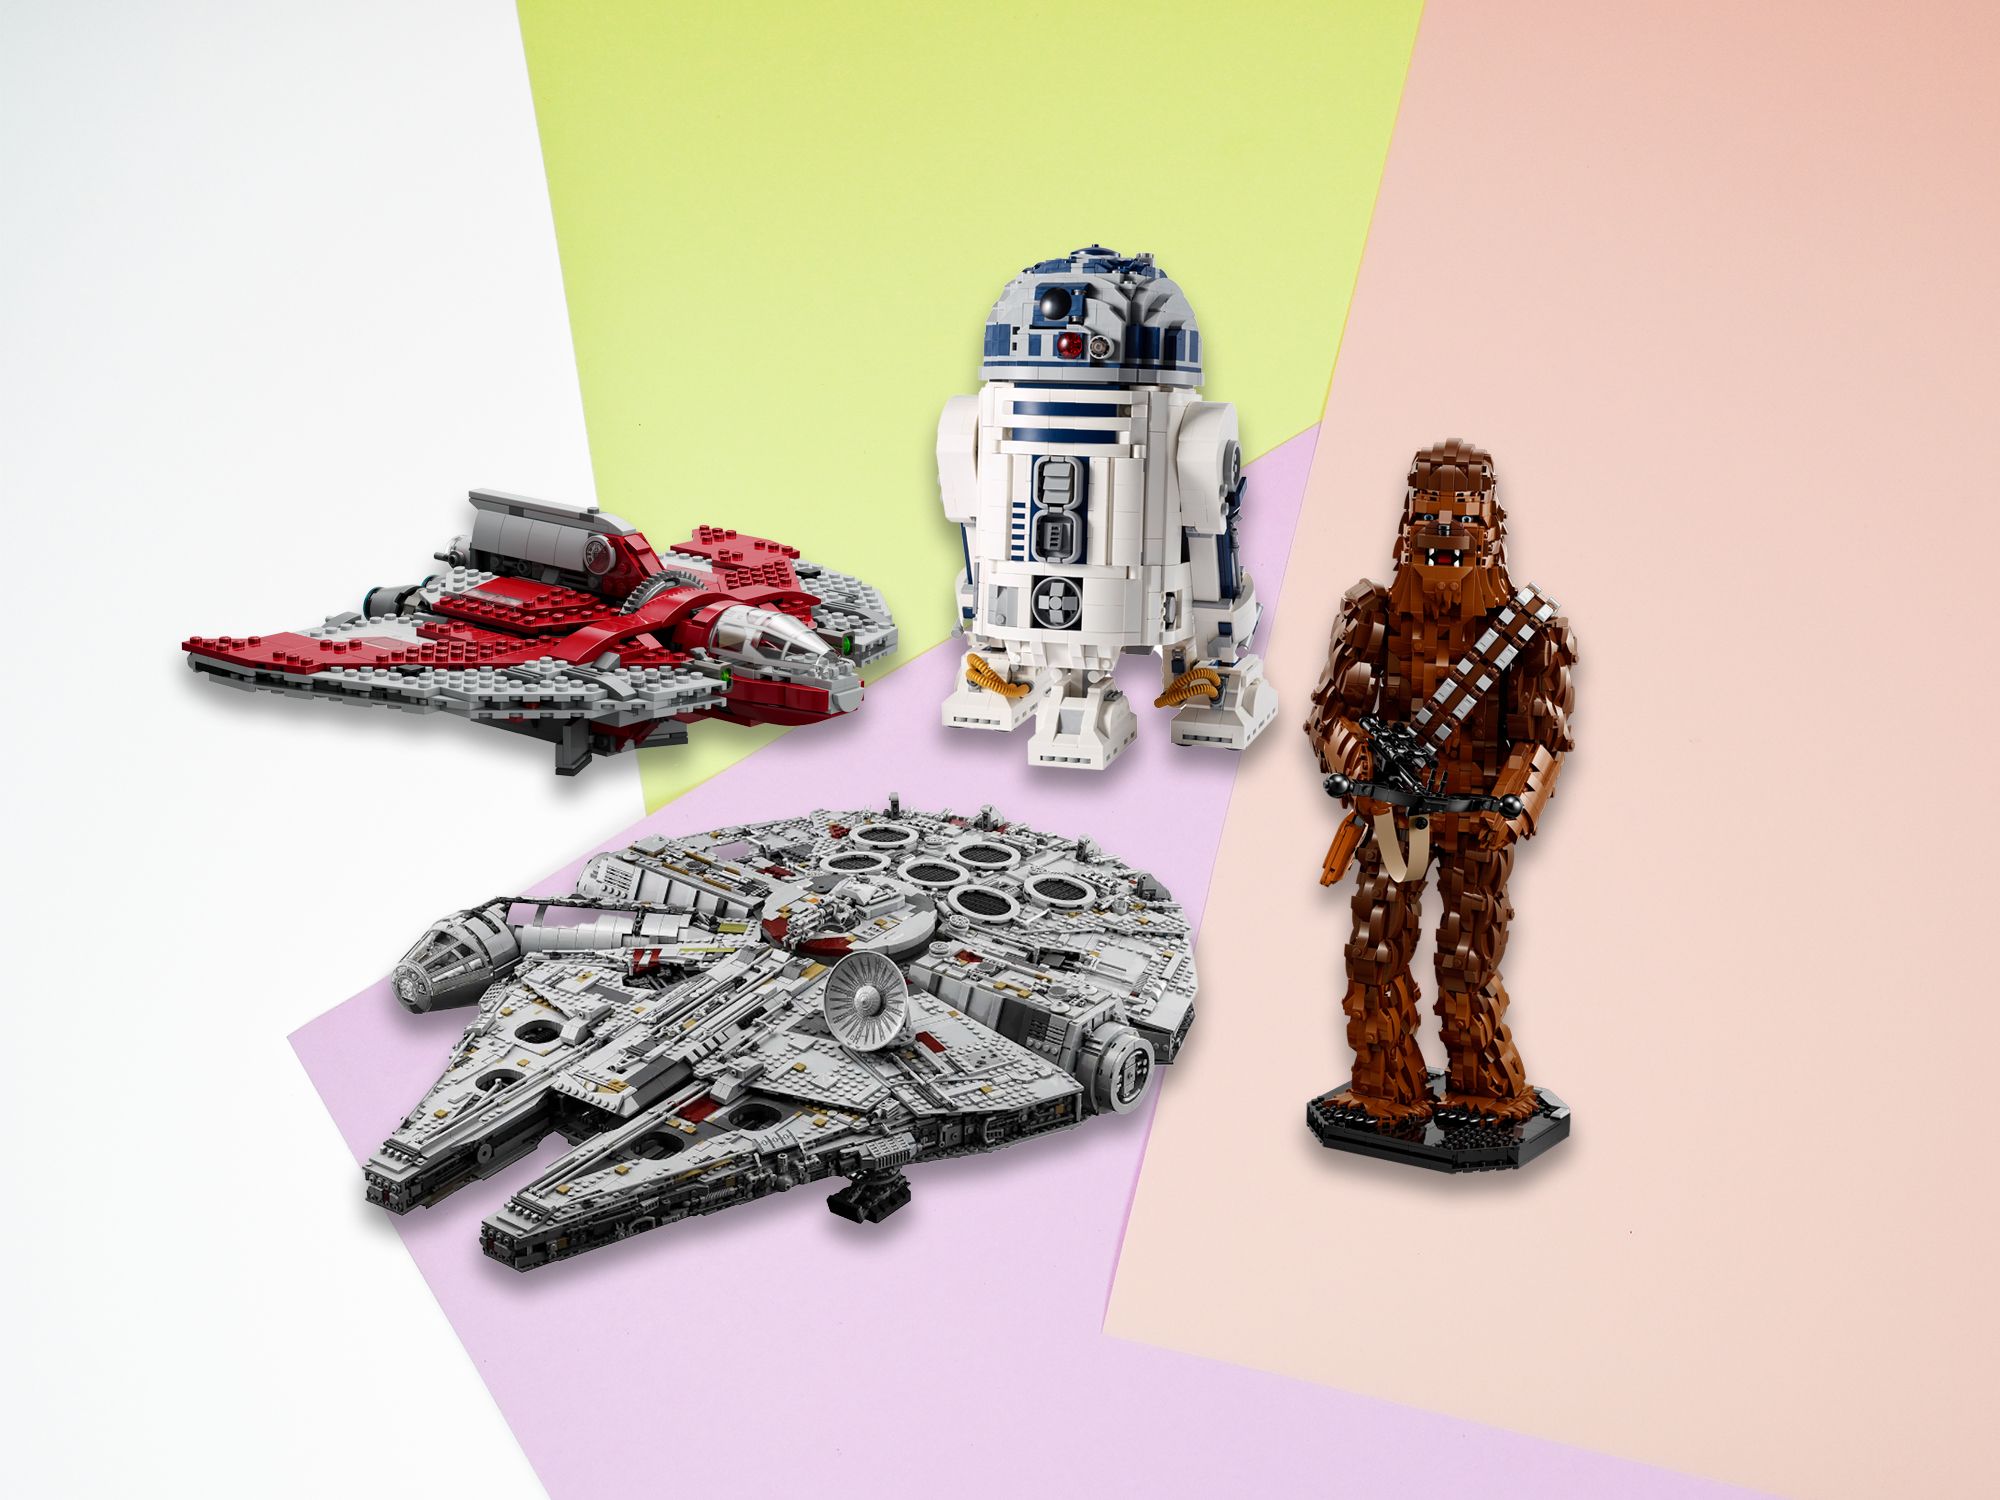 16 Best Star Wars Gift Ideas - Presents for Star Wars Fans - Zavvi UK